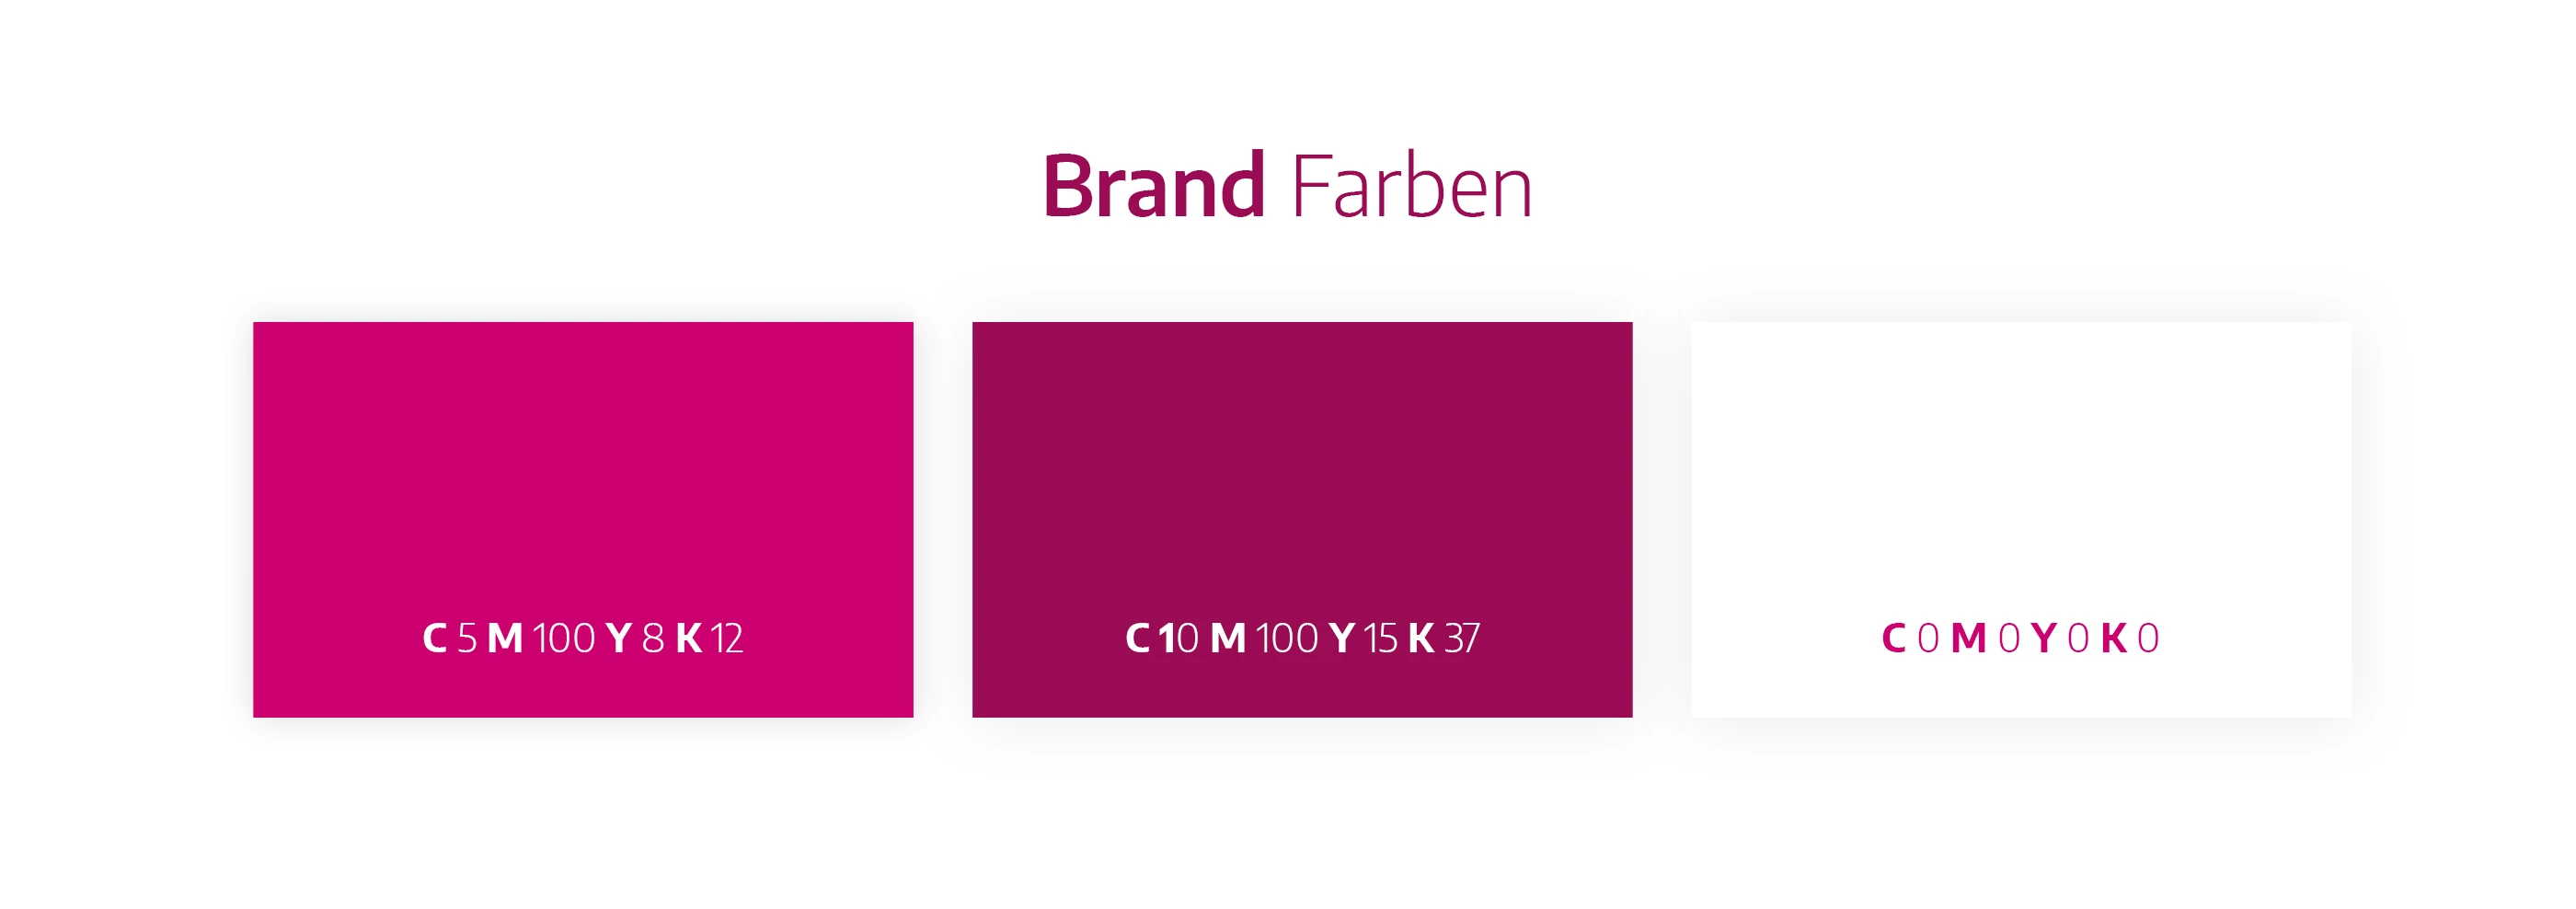 Brand Identity Farben